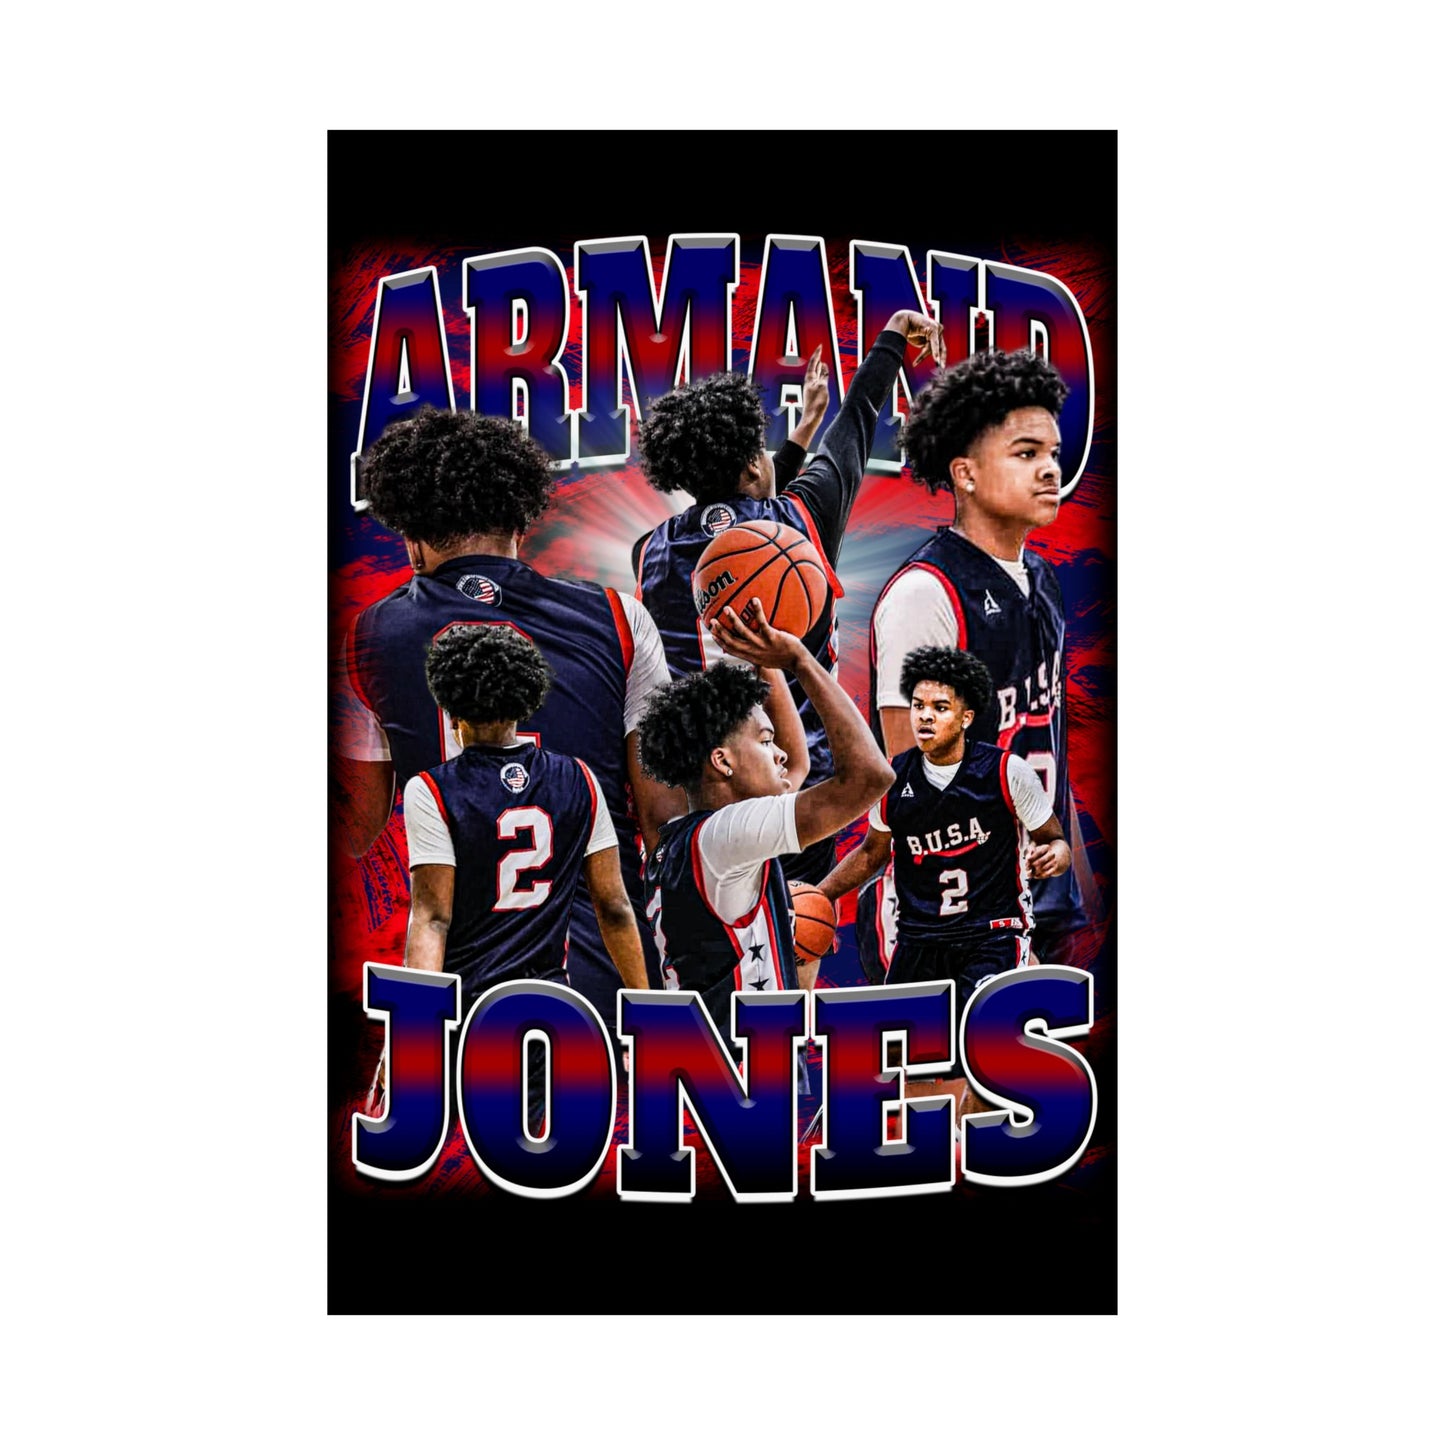 Armand Jones Poster 24" x 36"